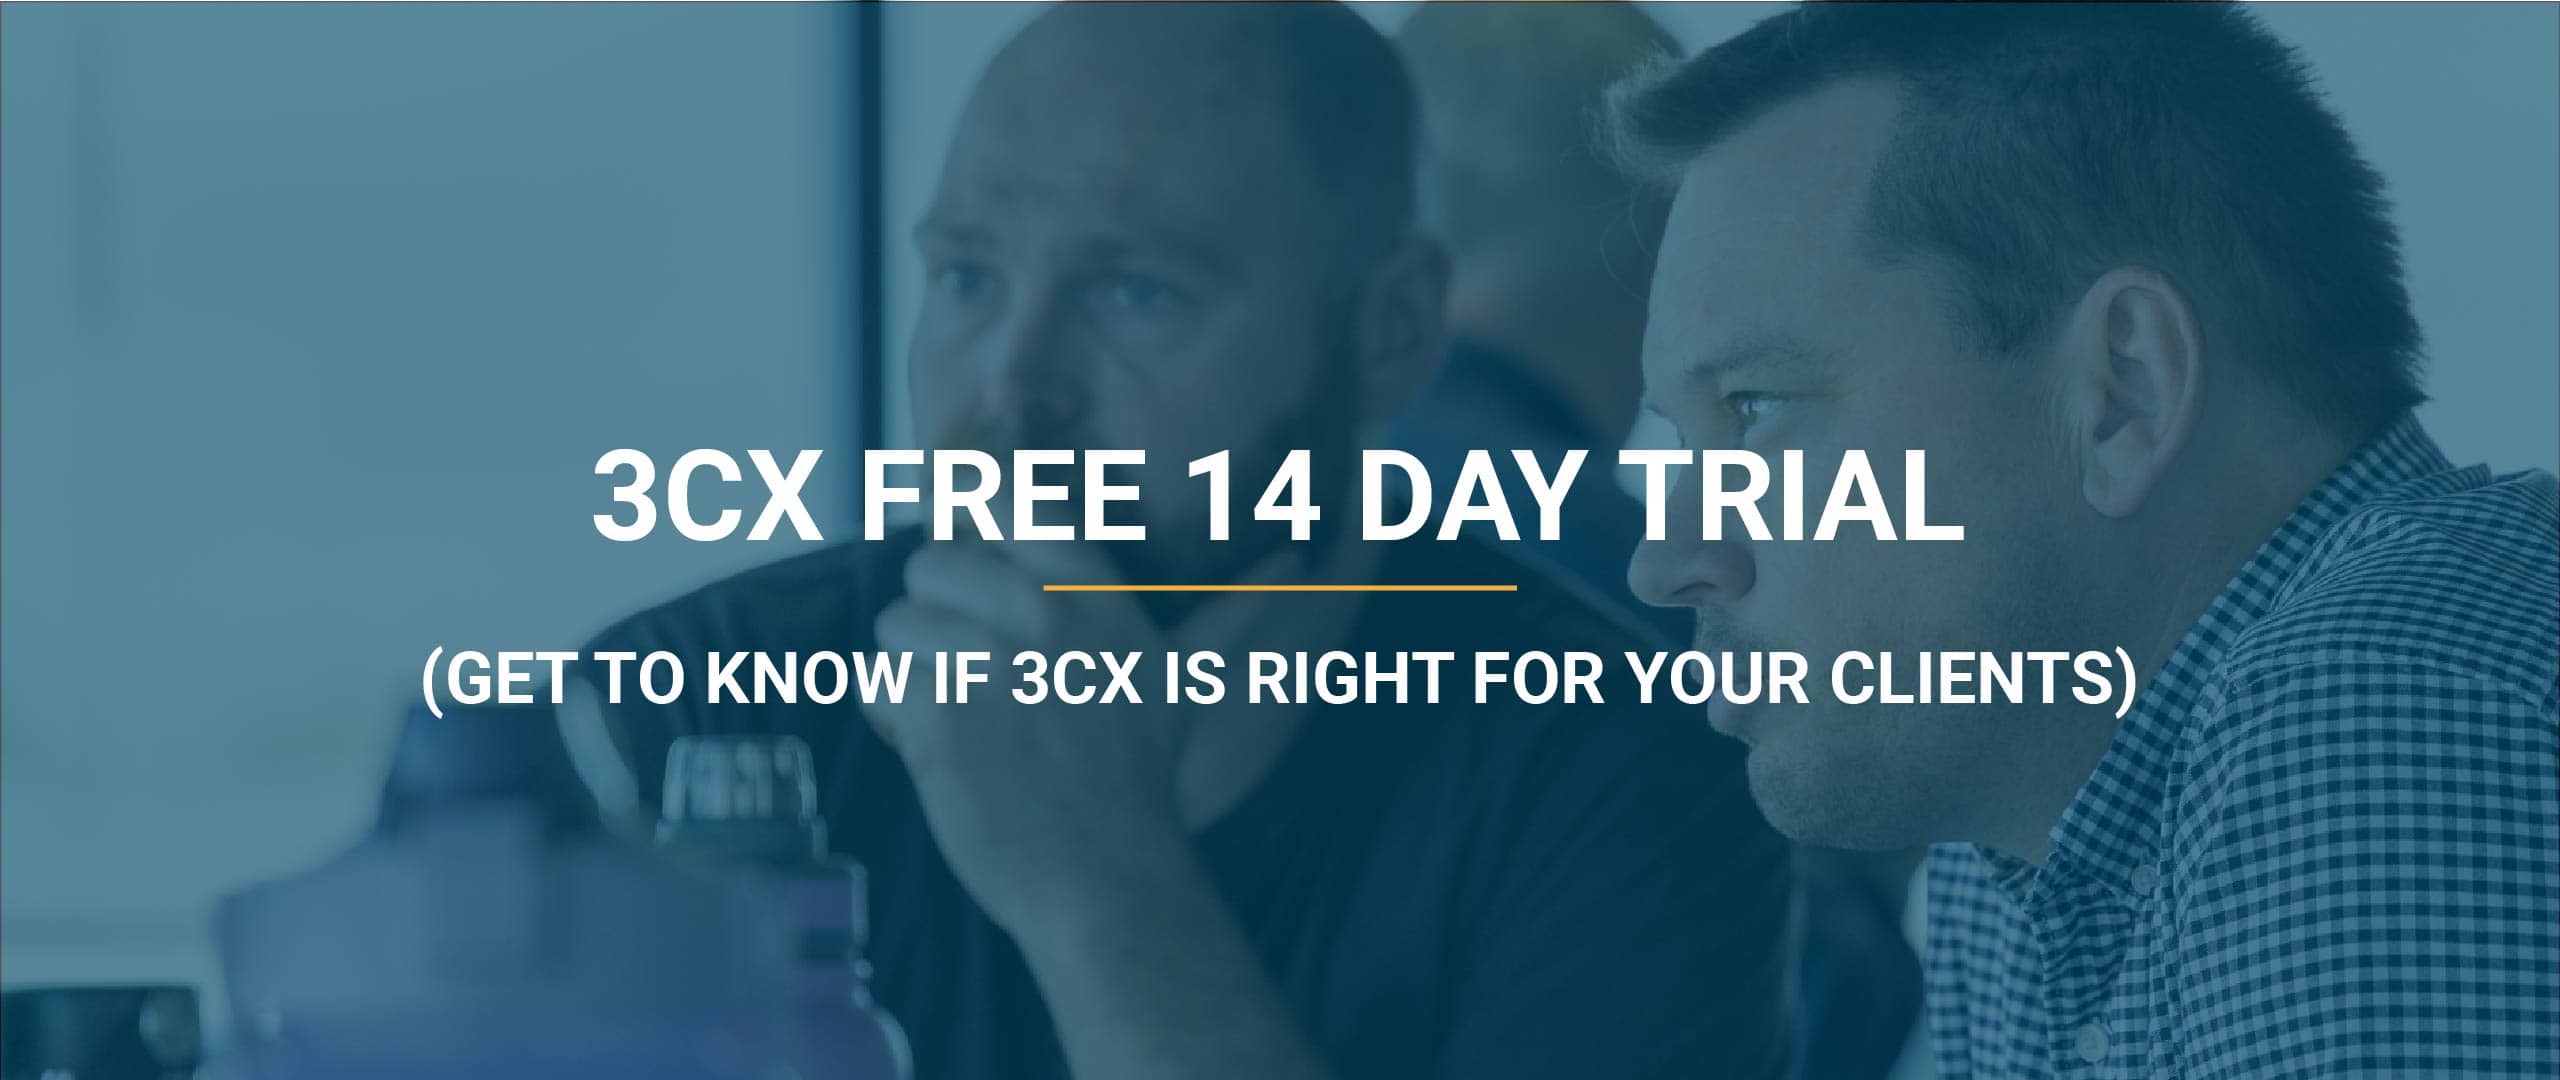 3CX free trial